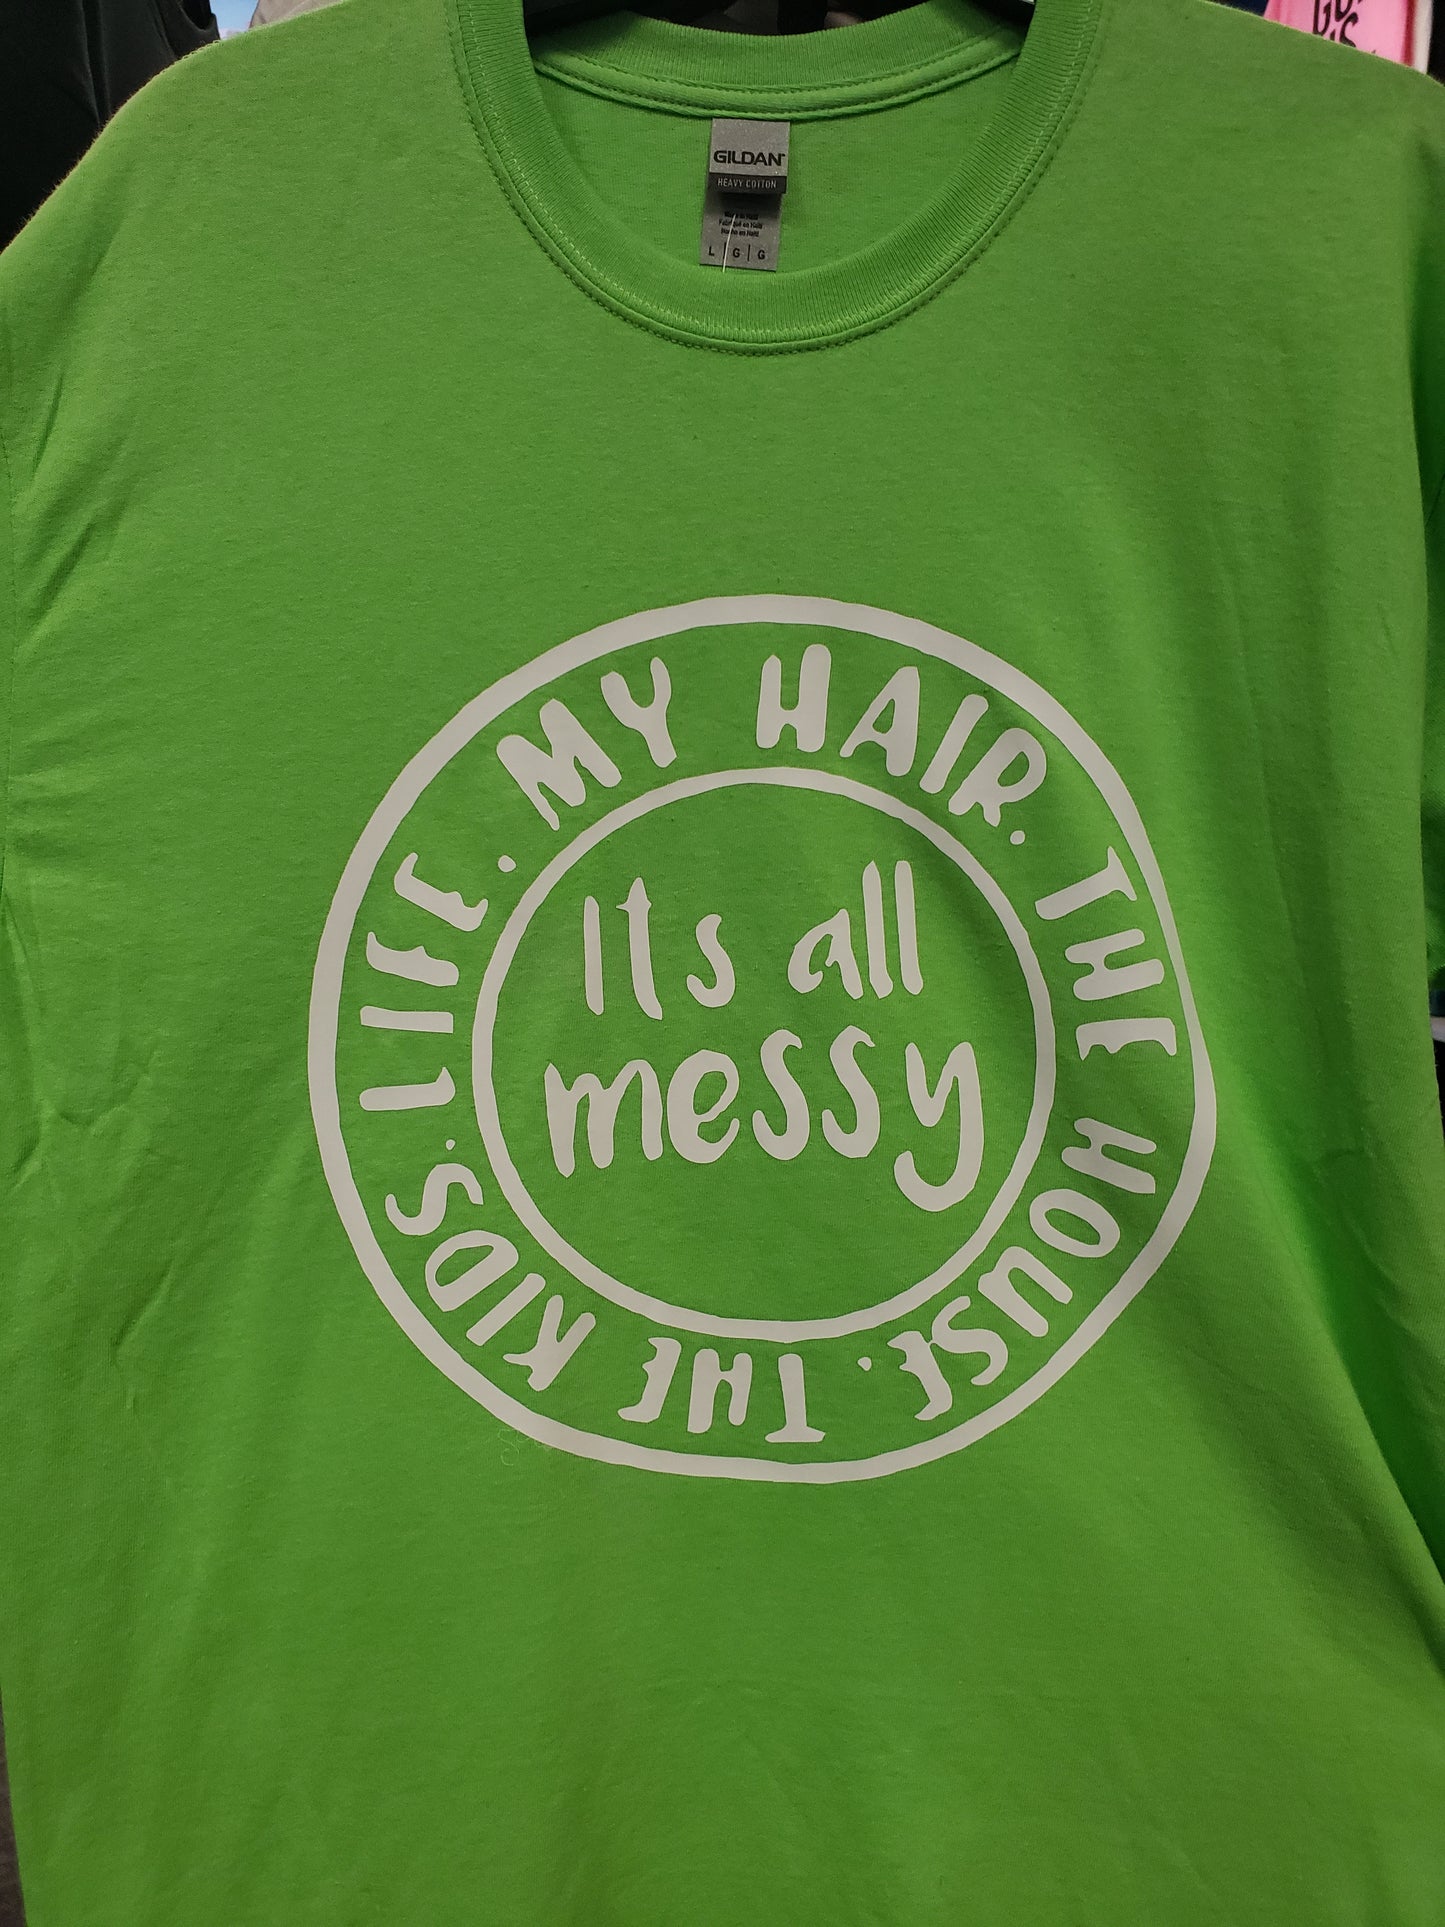 "It's All Messy" Custom T-shirt